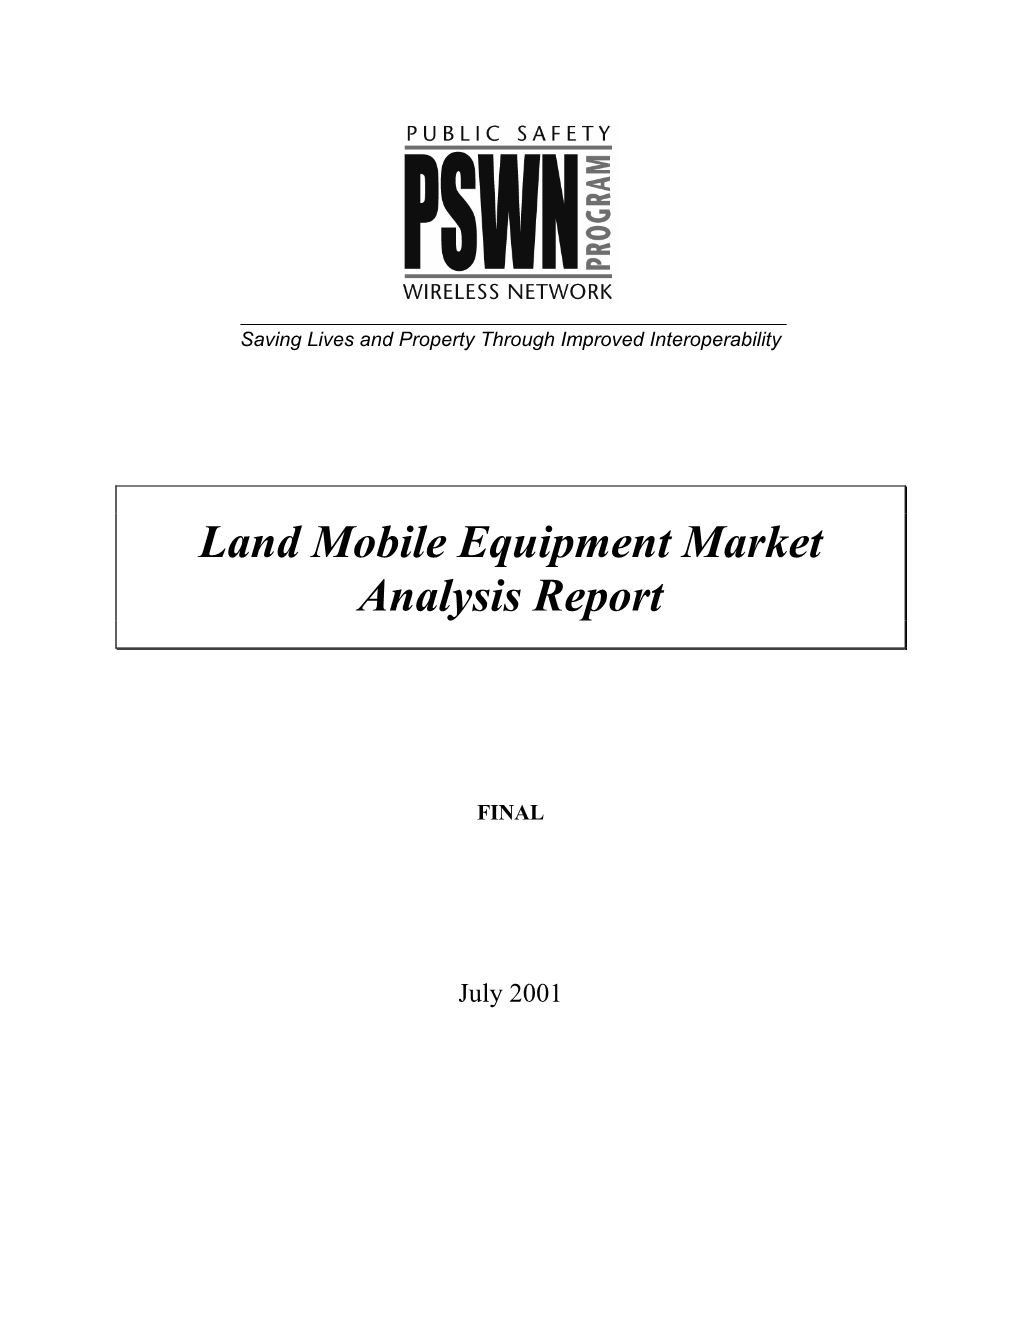 Land Mobile Equipment Market Analysis Report